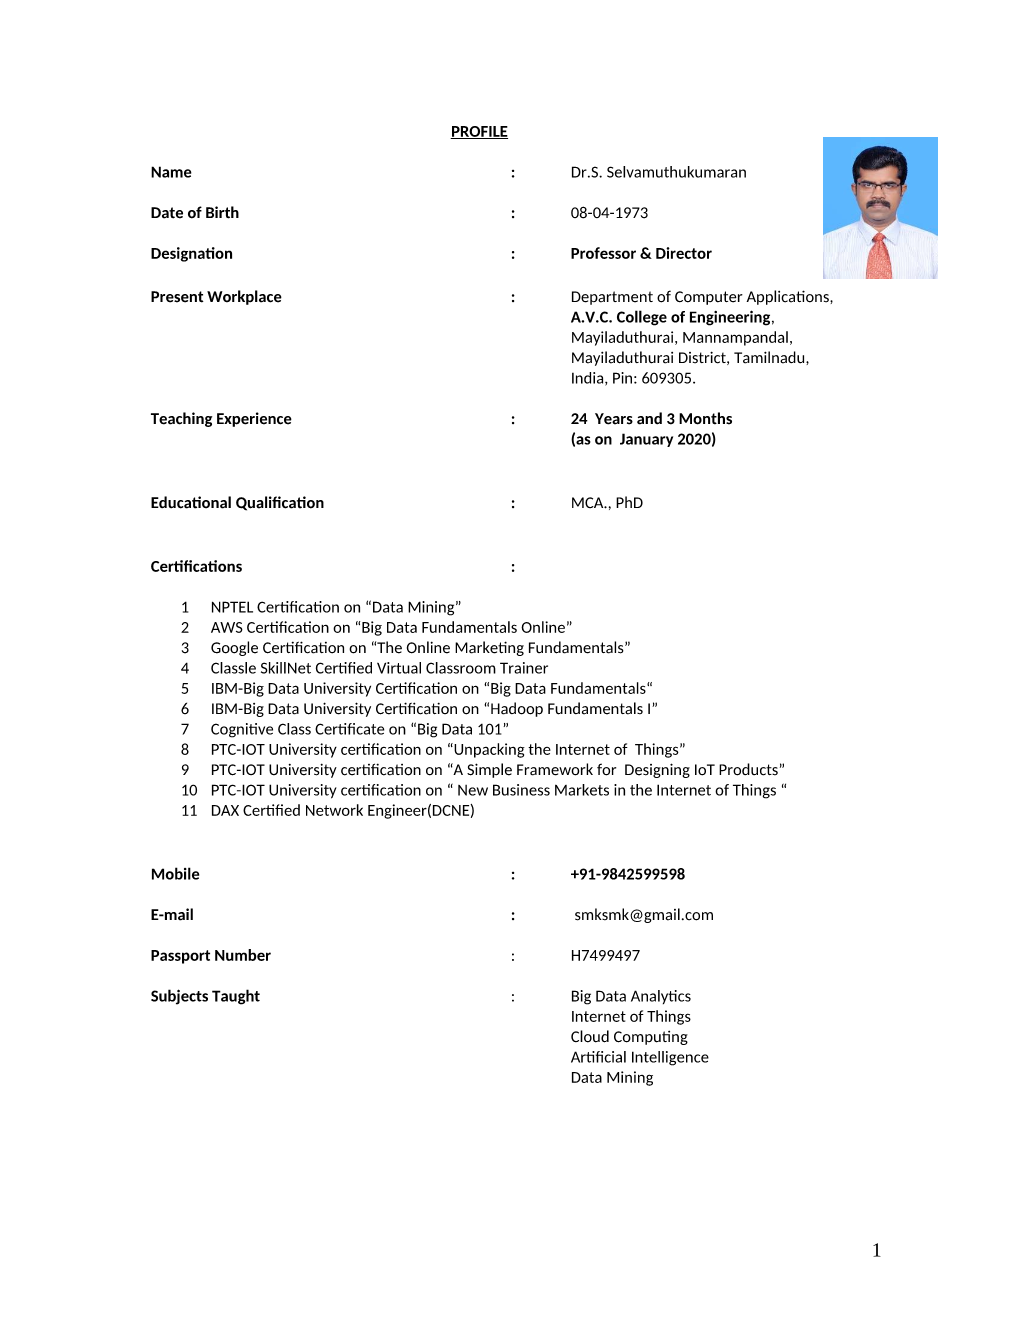 PROFILE Name : Dr.S. Selvamuthukumaran Date of Birth